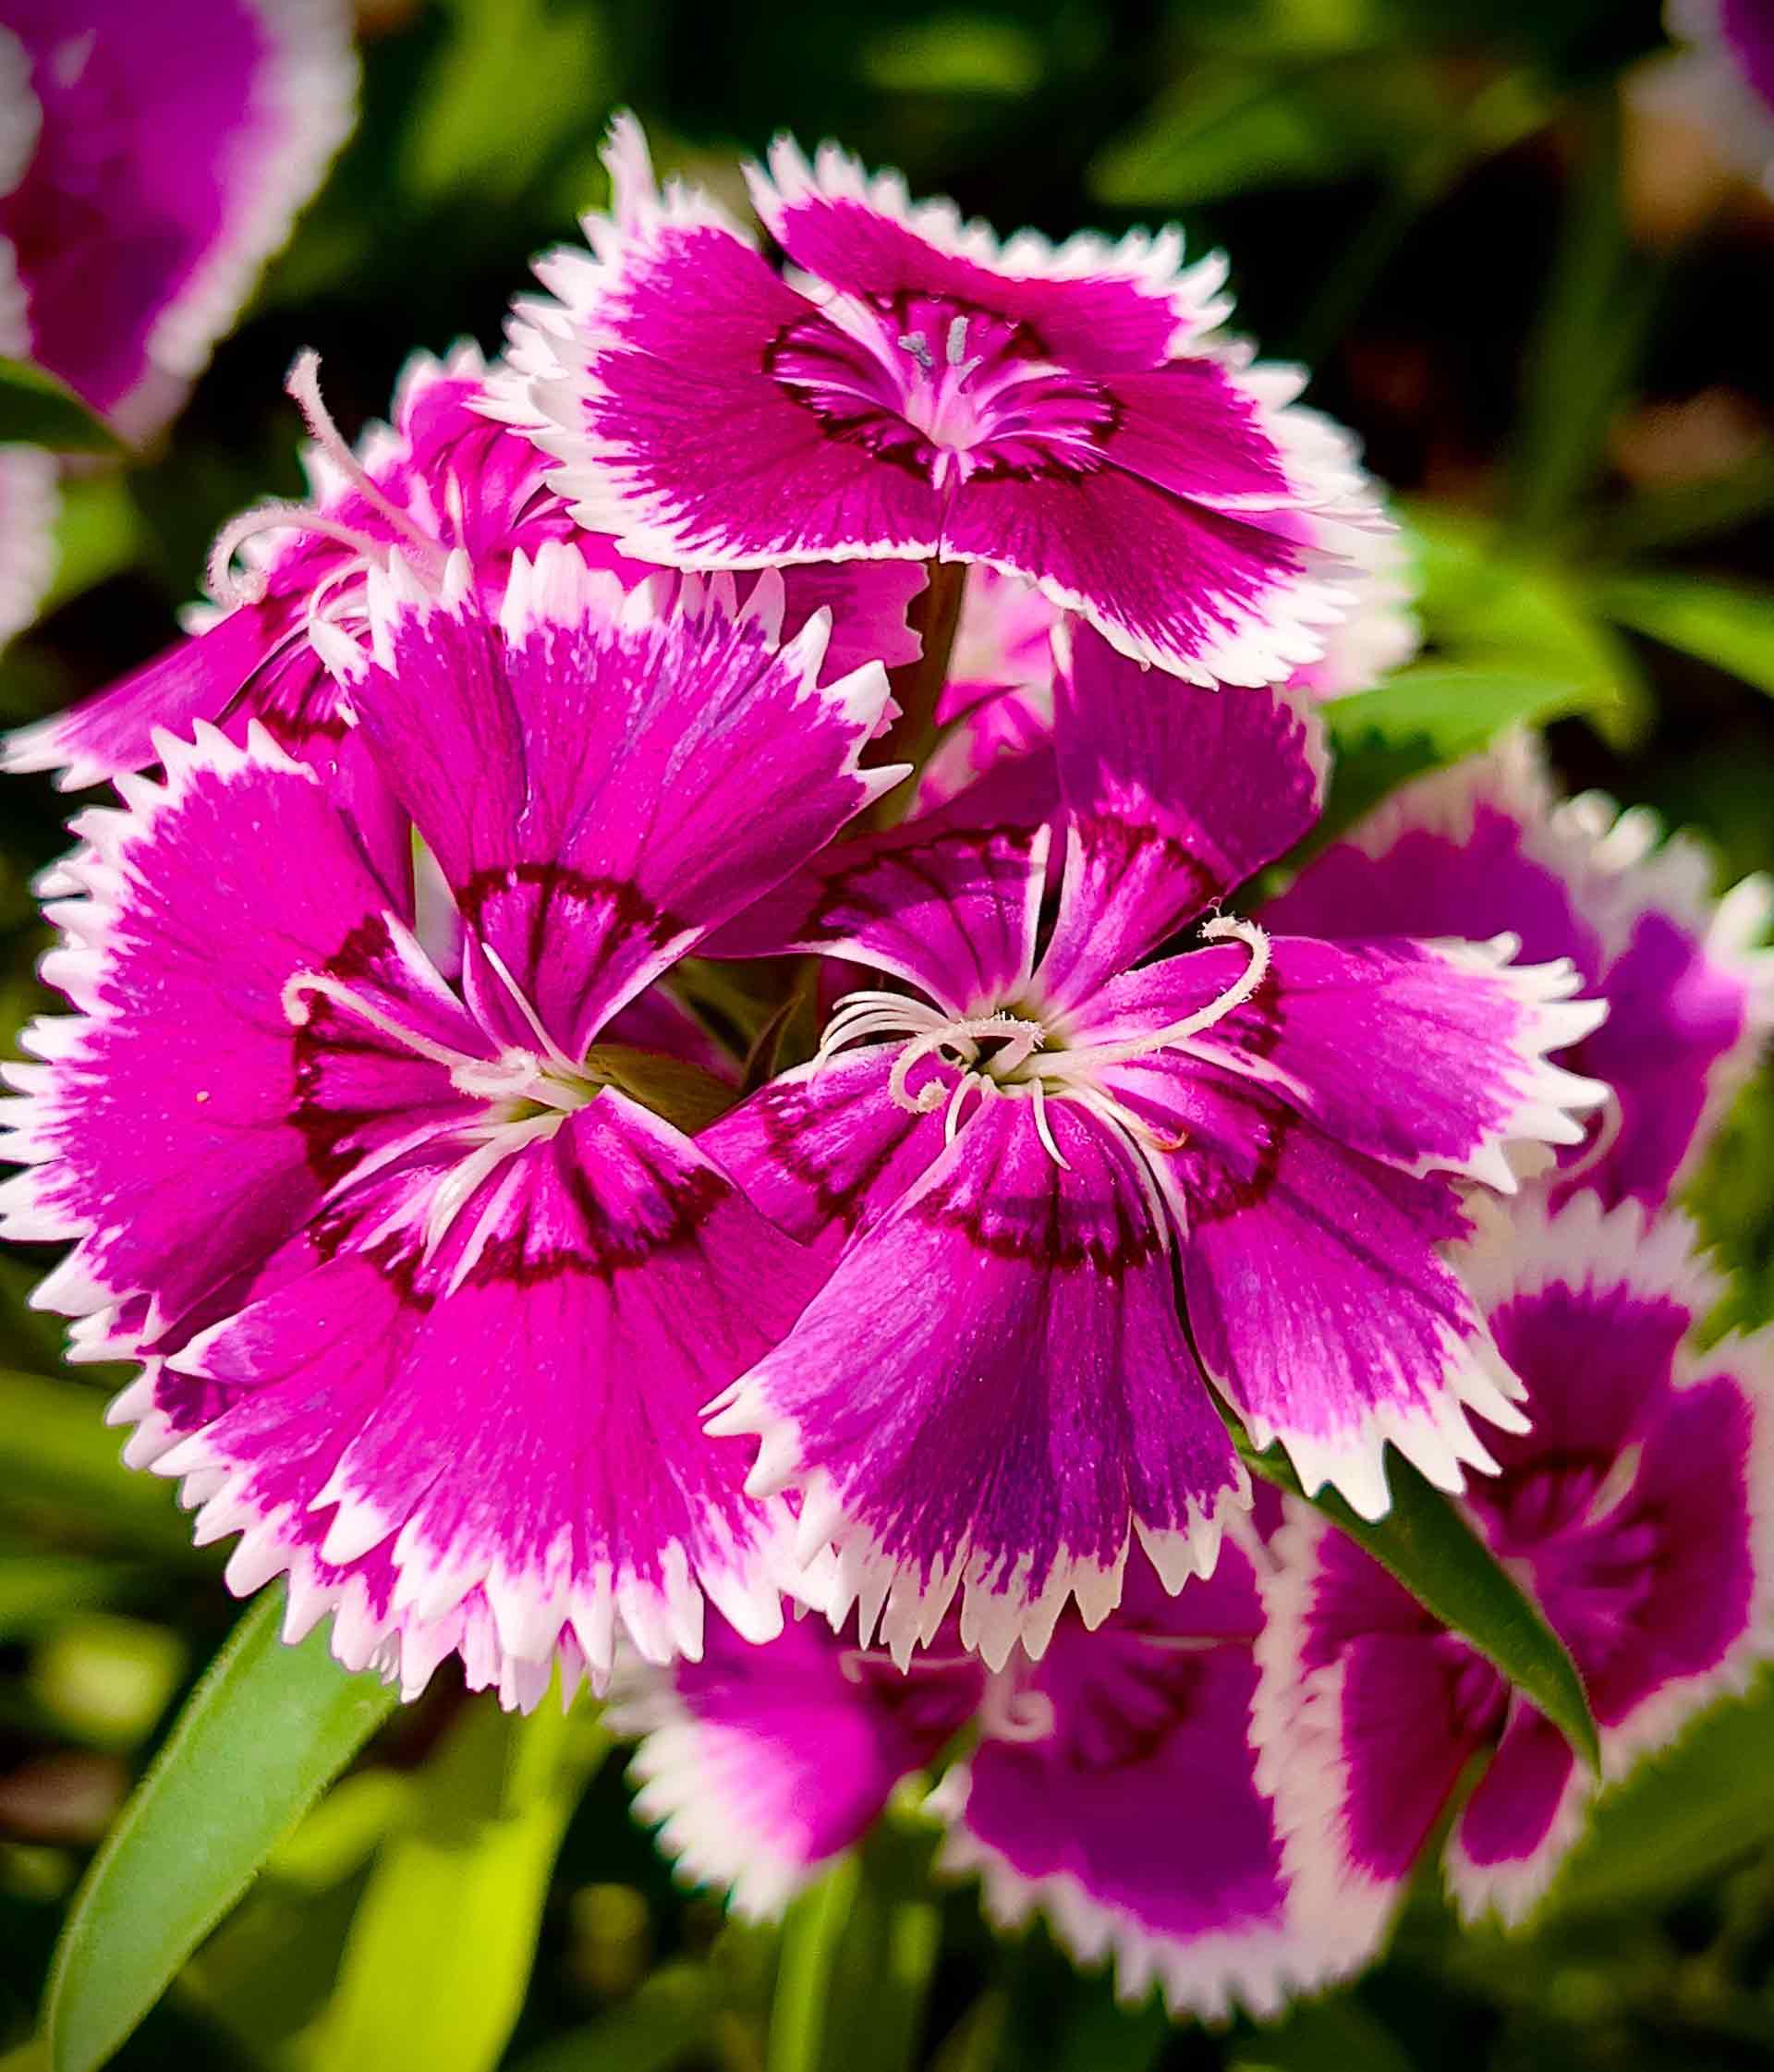 A close up of Dianthus plant flowers